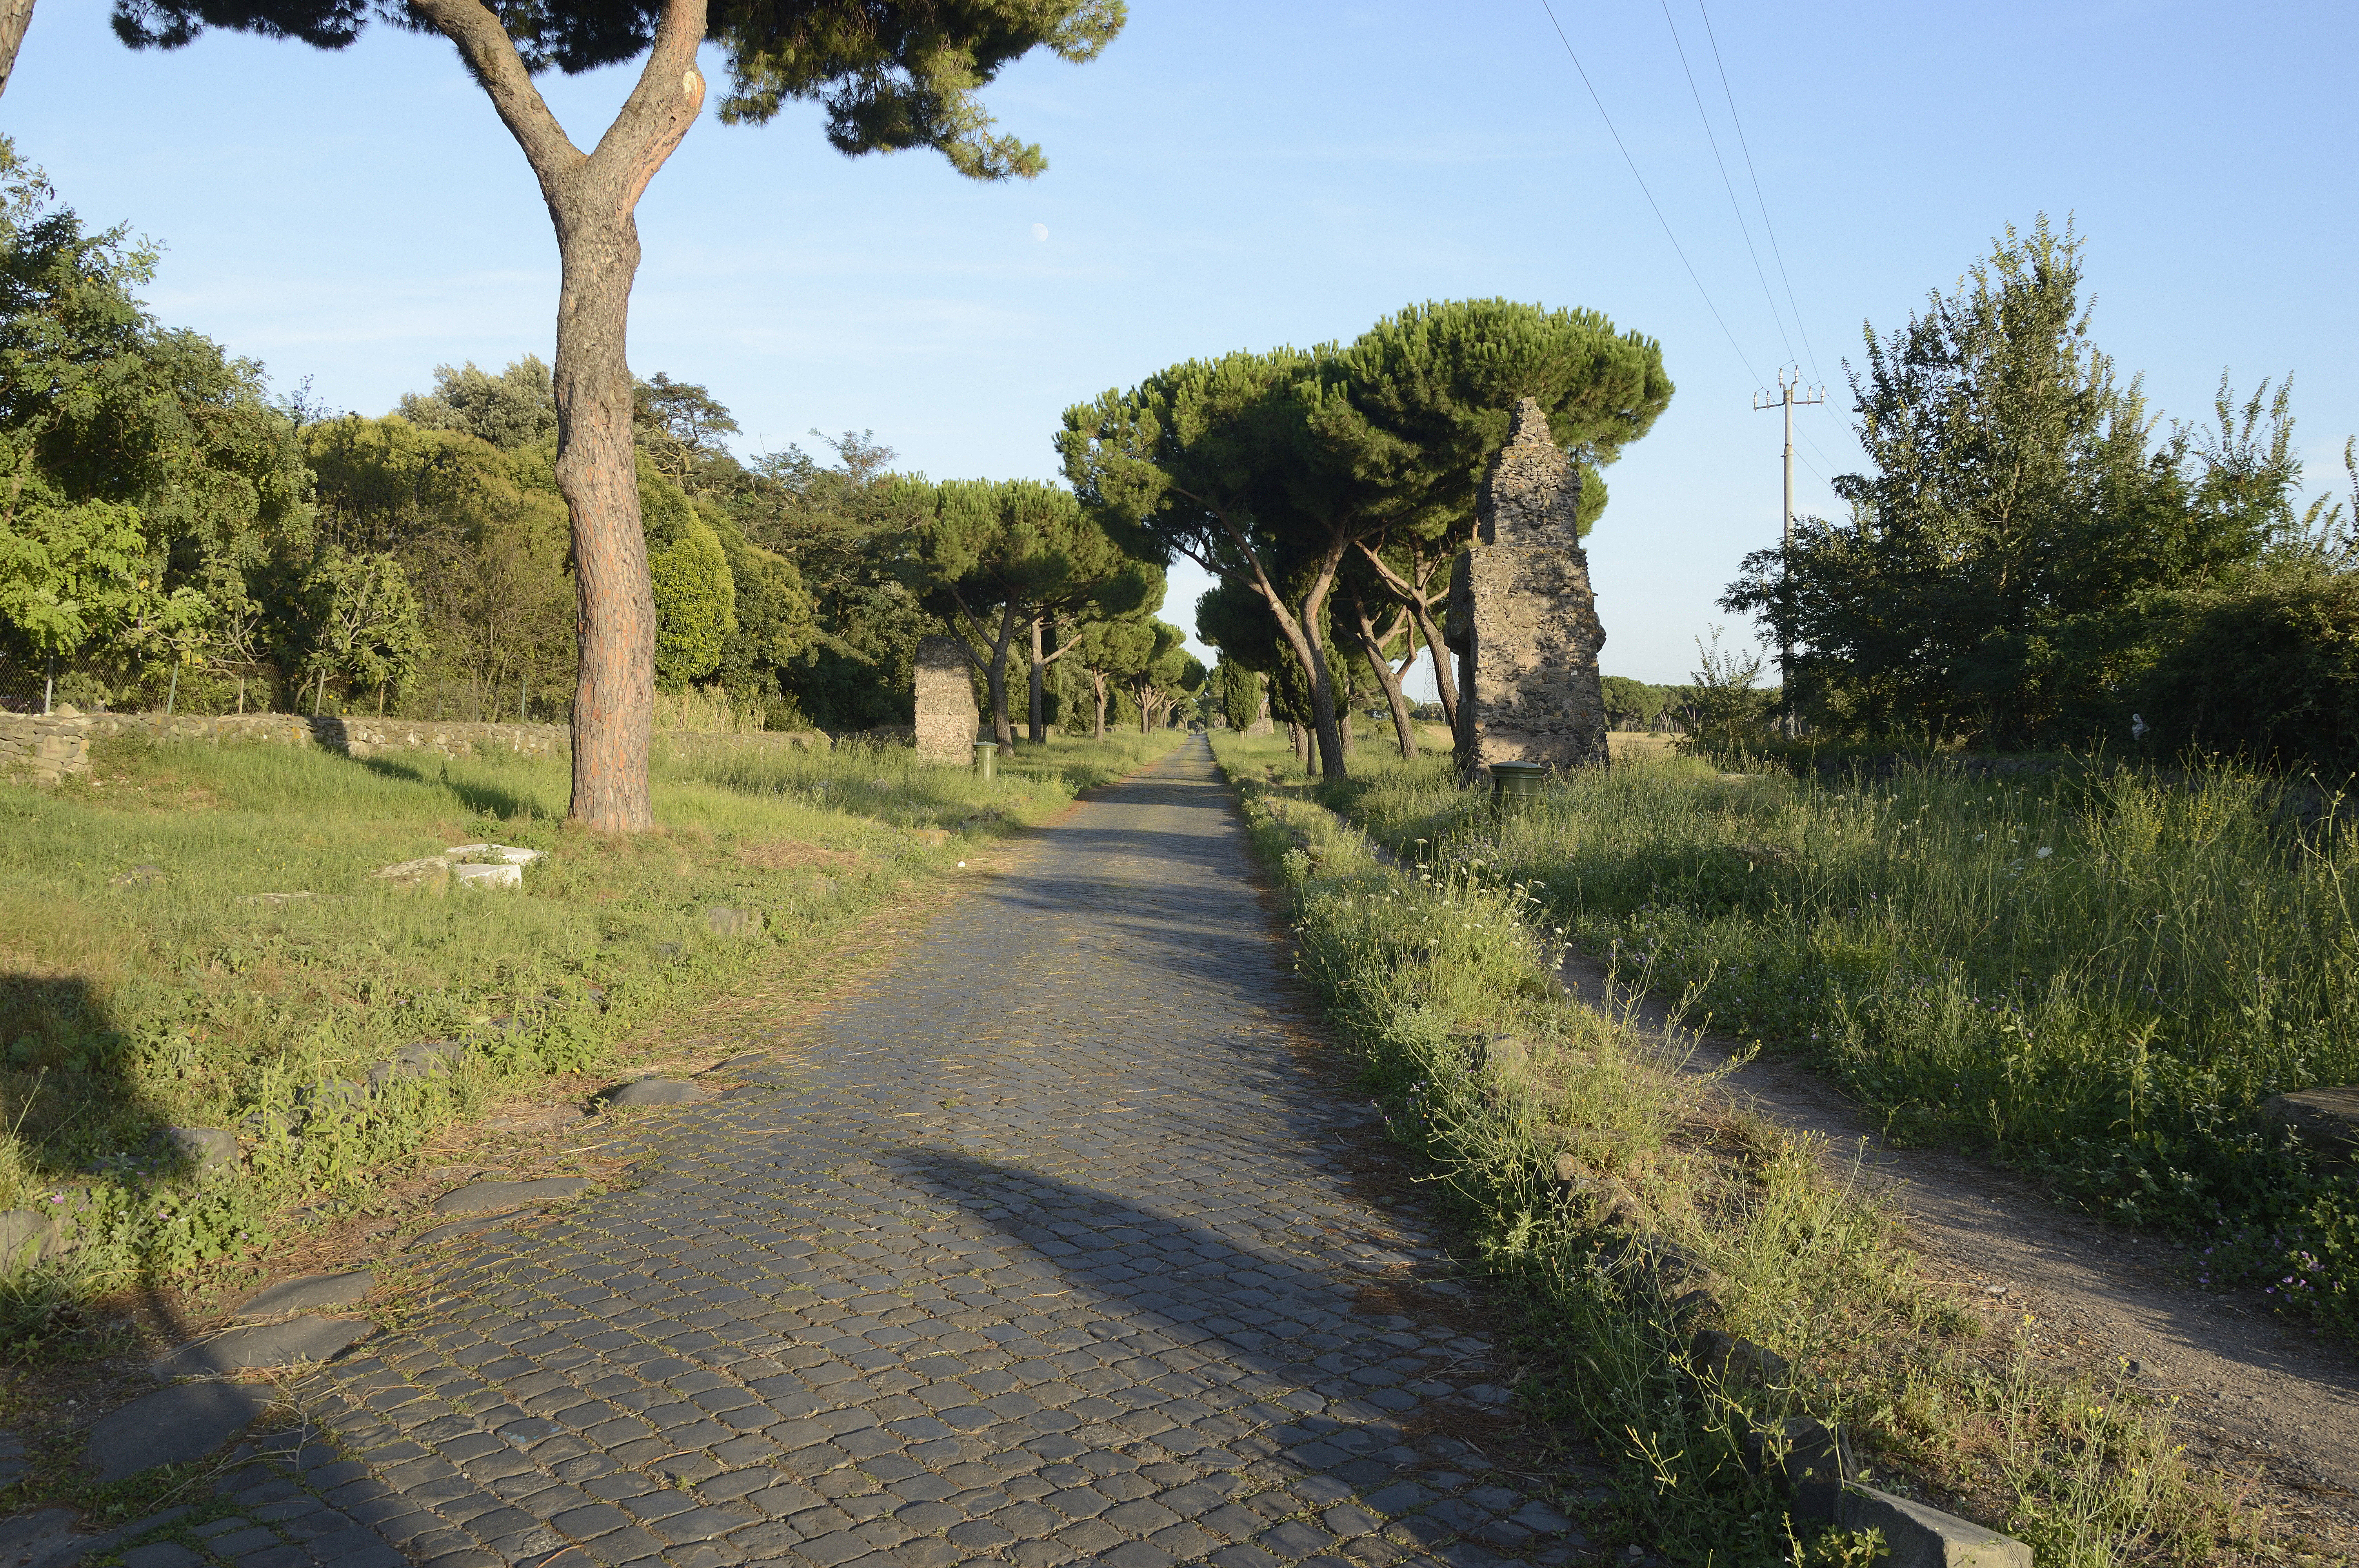 Appian Way.jpg